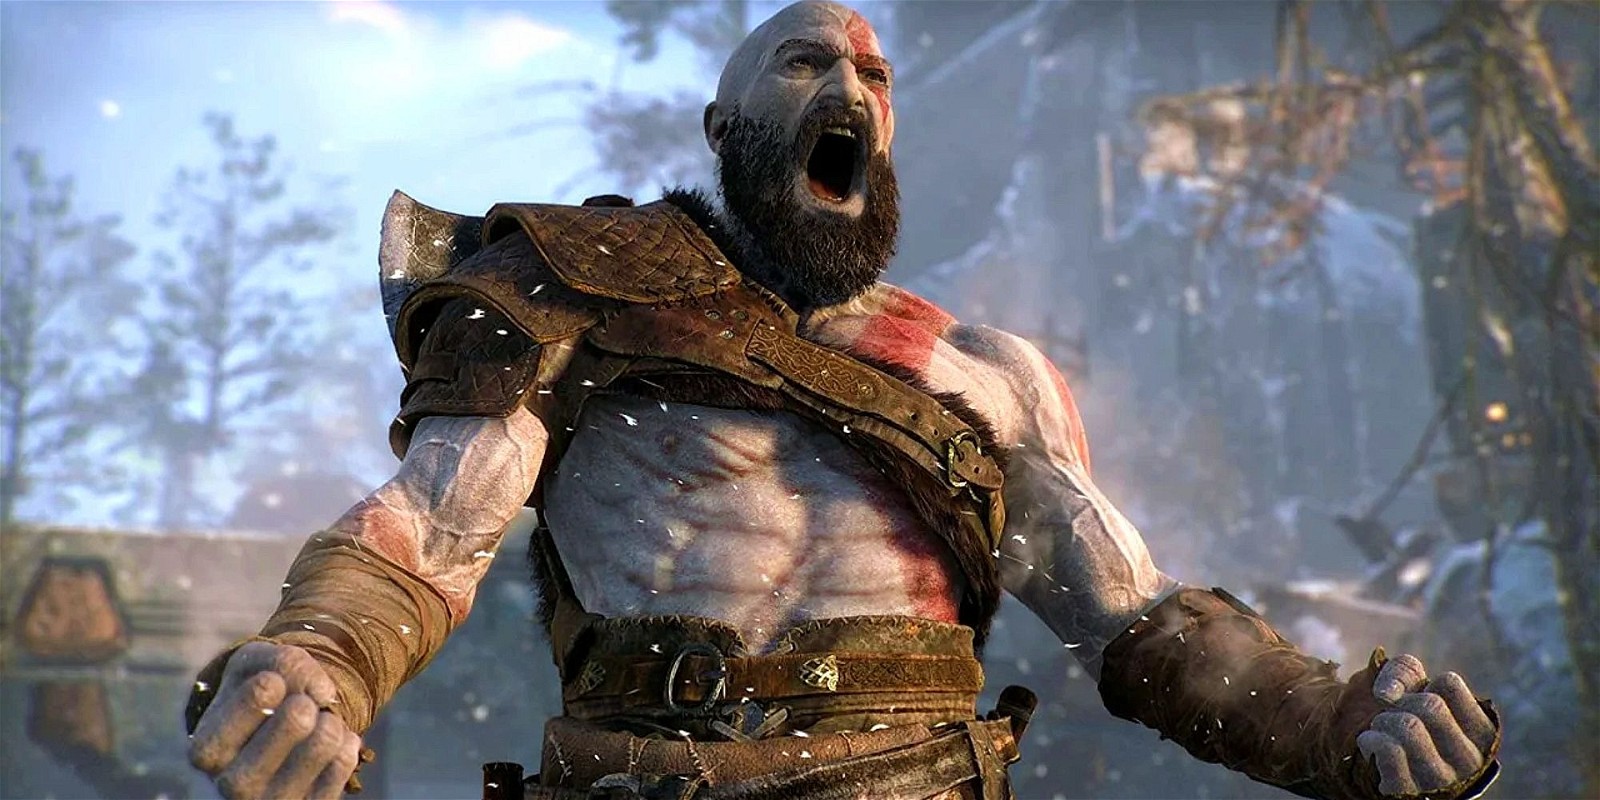 A still of Kratos from God of War